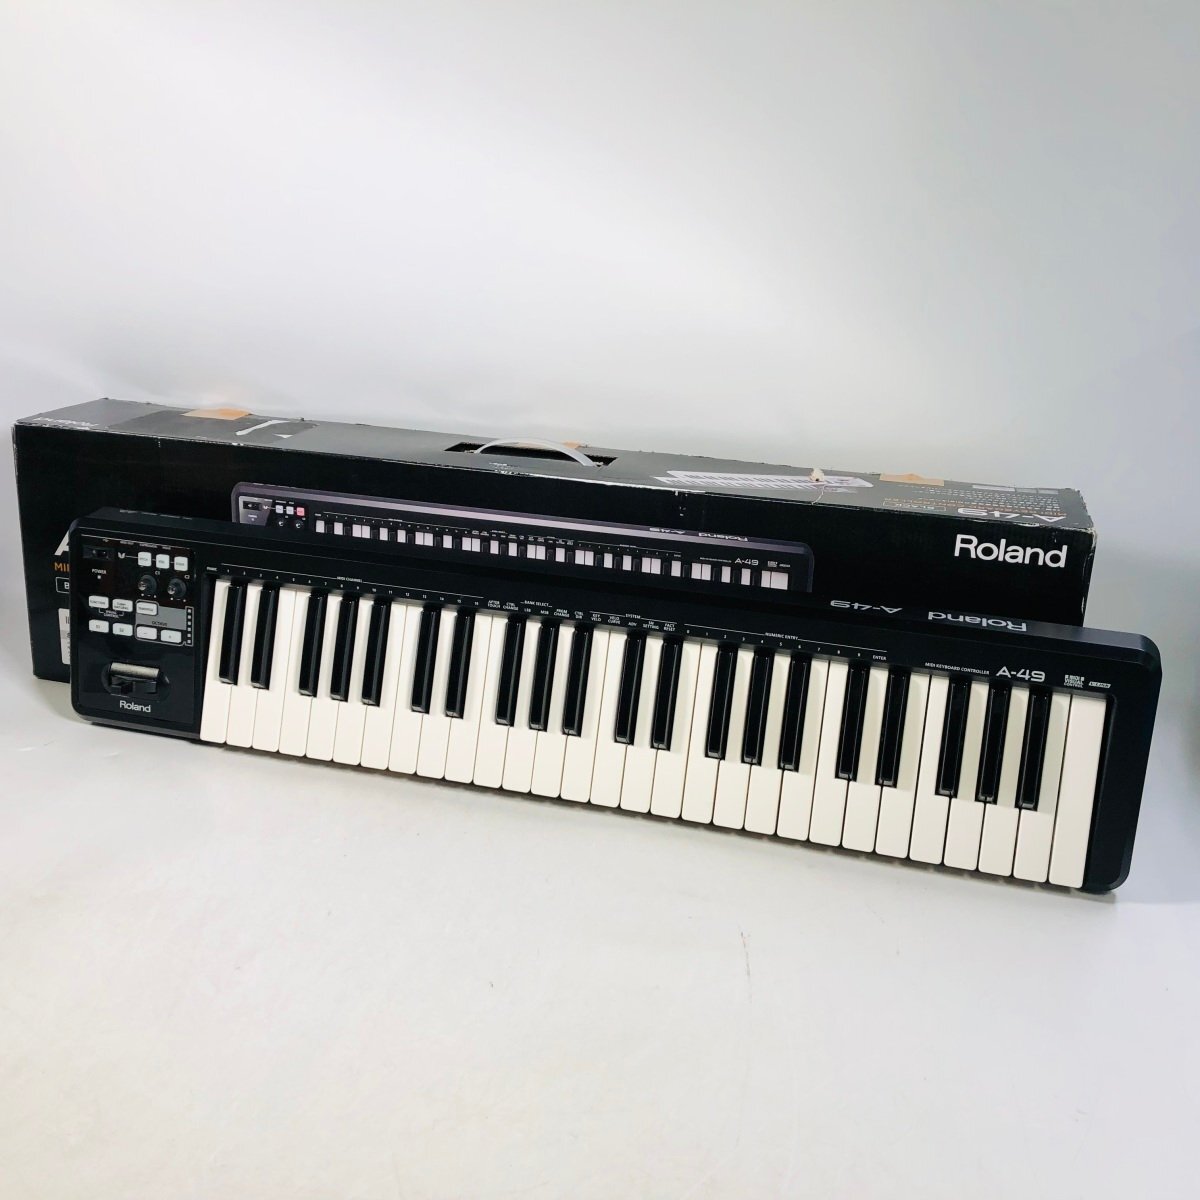 Roland MIDIキーボード A-49 ブラック_画像1